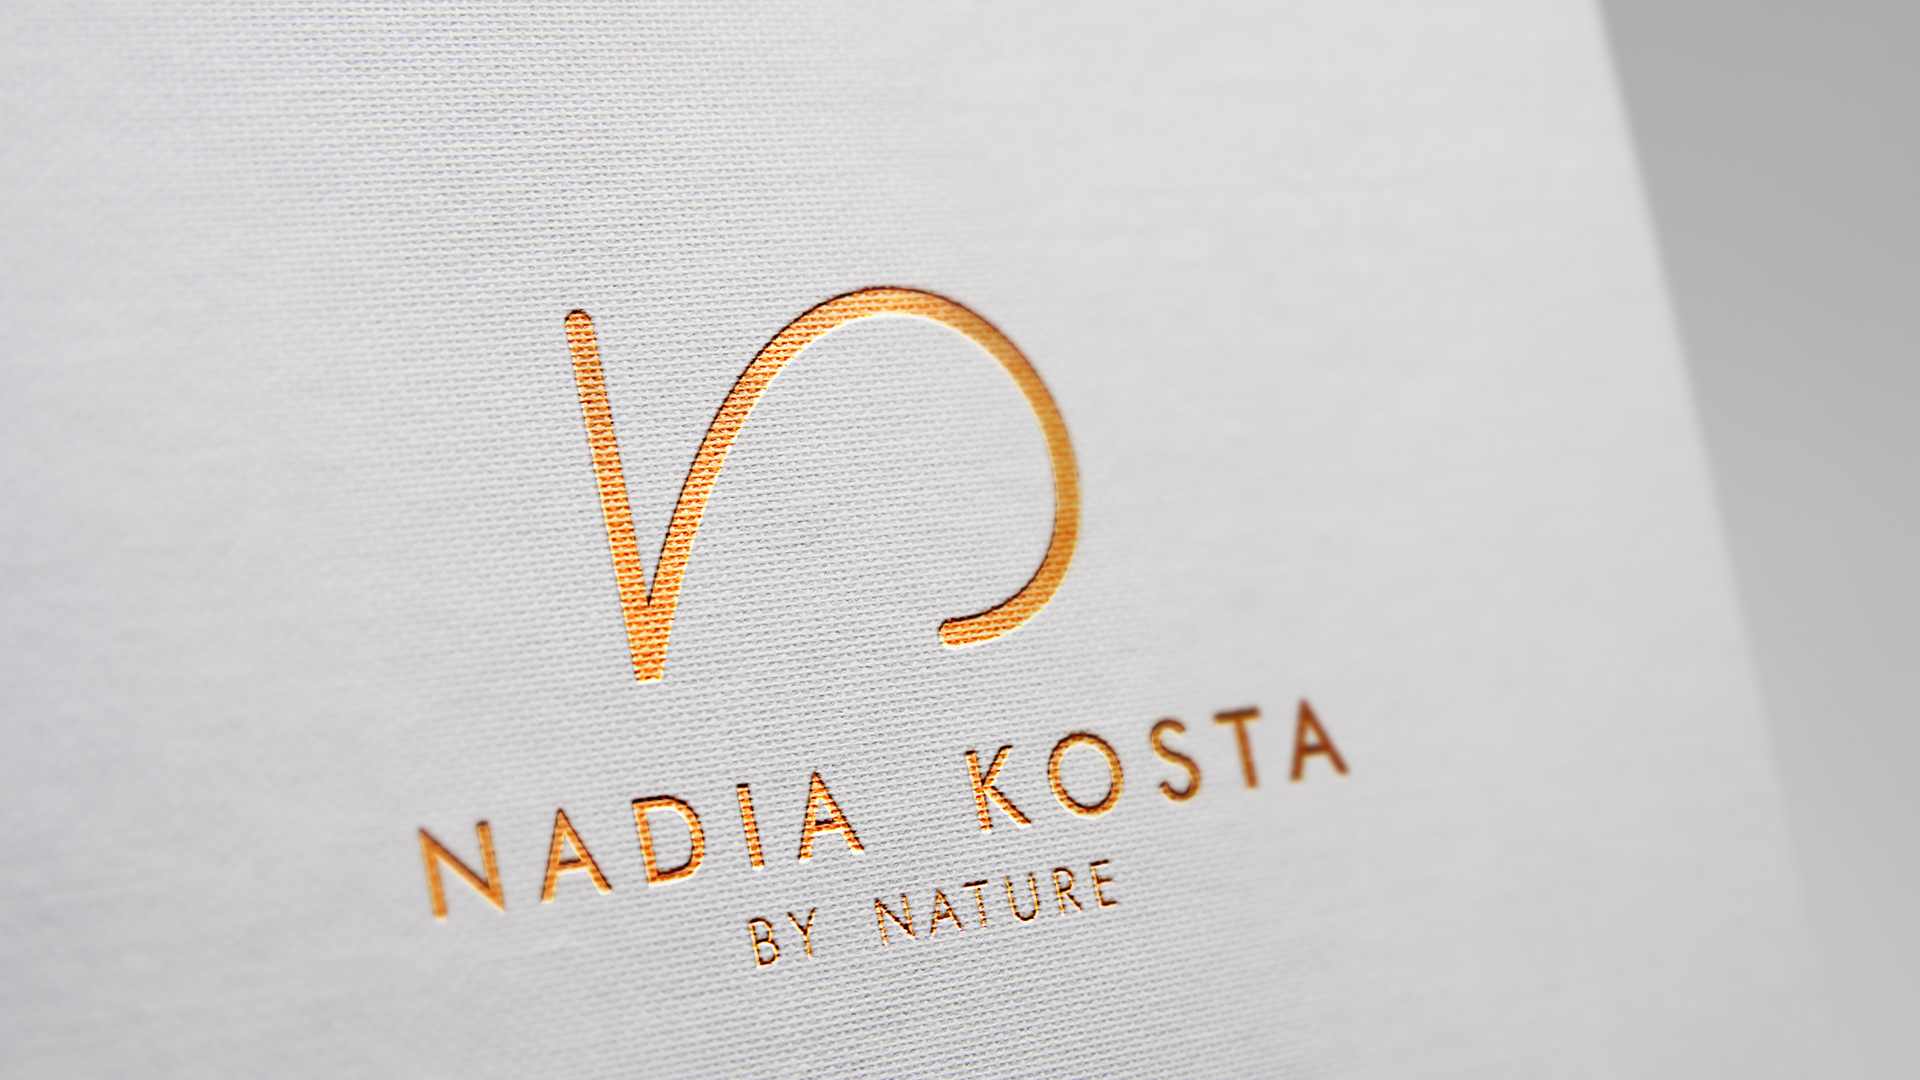 Nadia Kosta by Nature, 2023